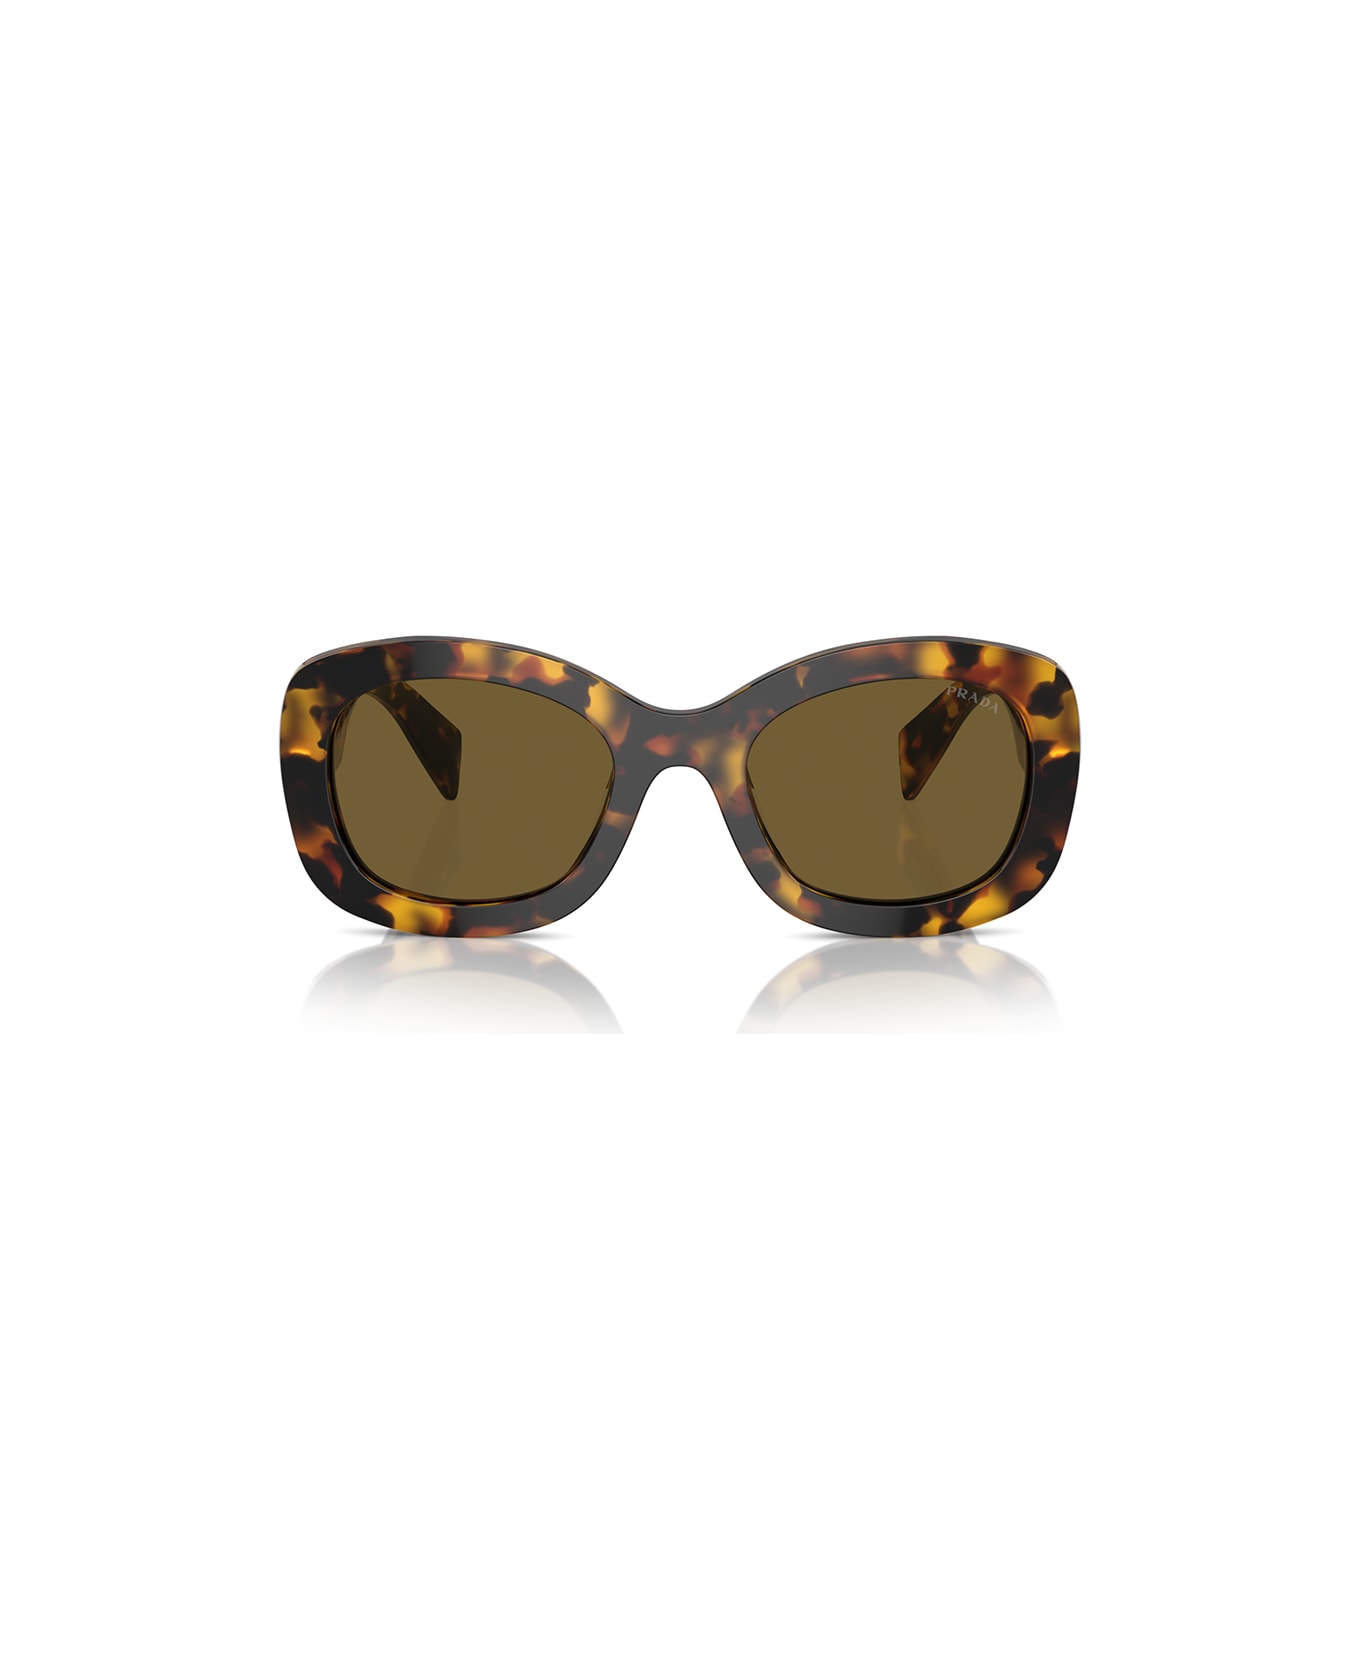 Prada Eyewear Sunglasses - Marrone/Marrone サングラス